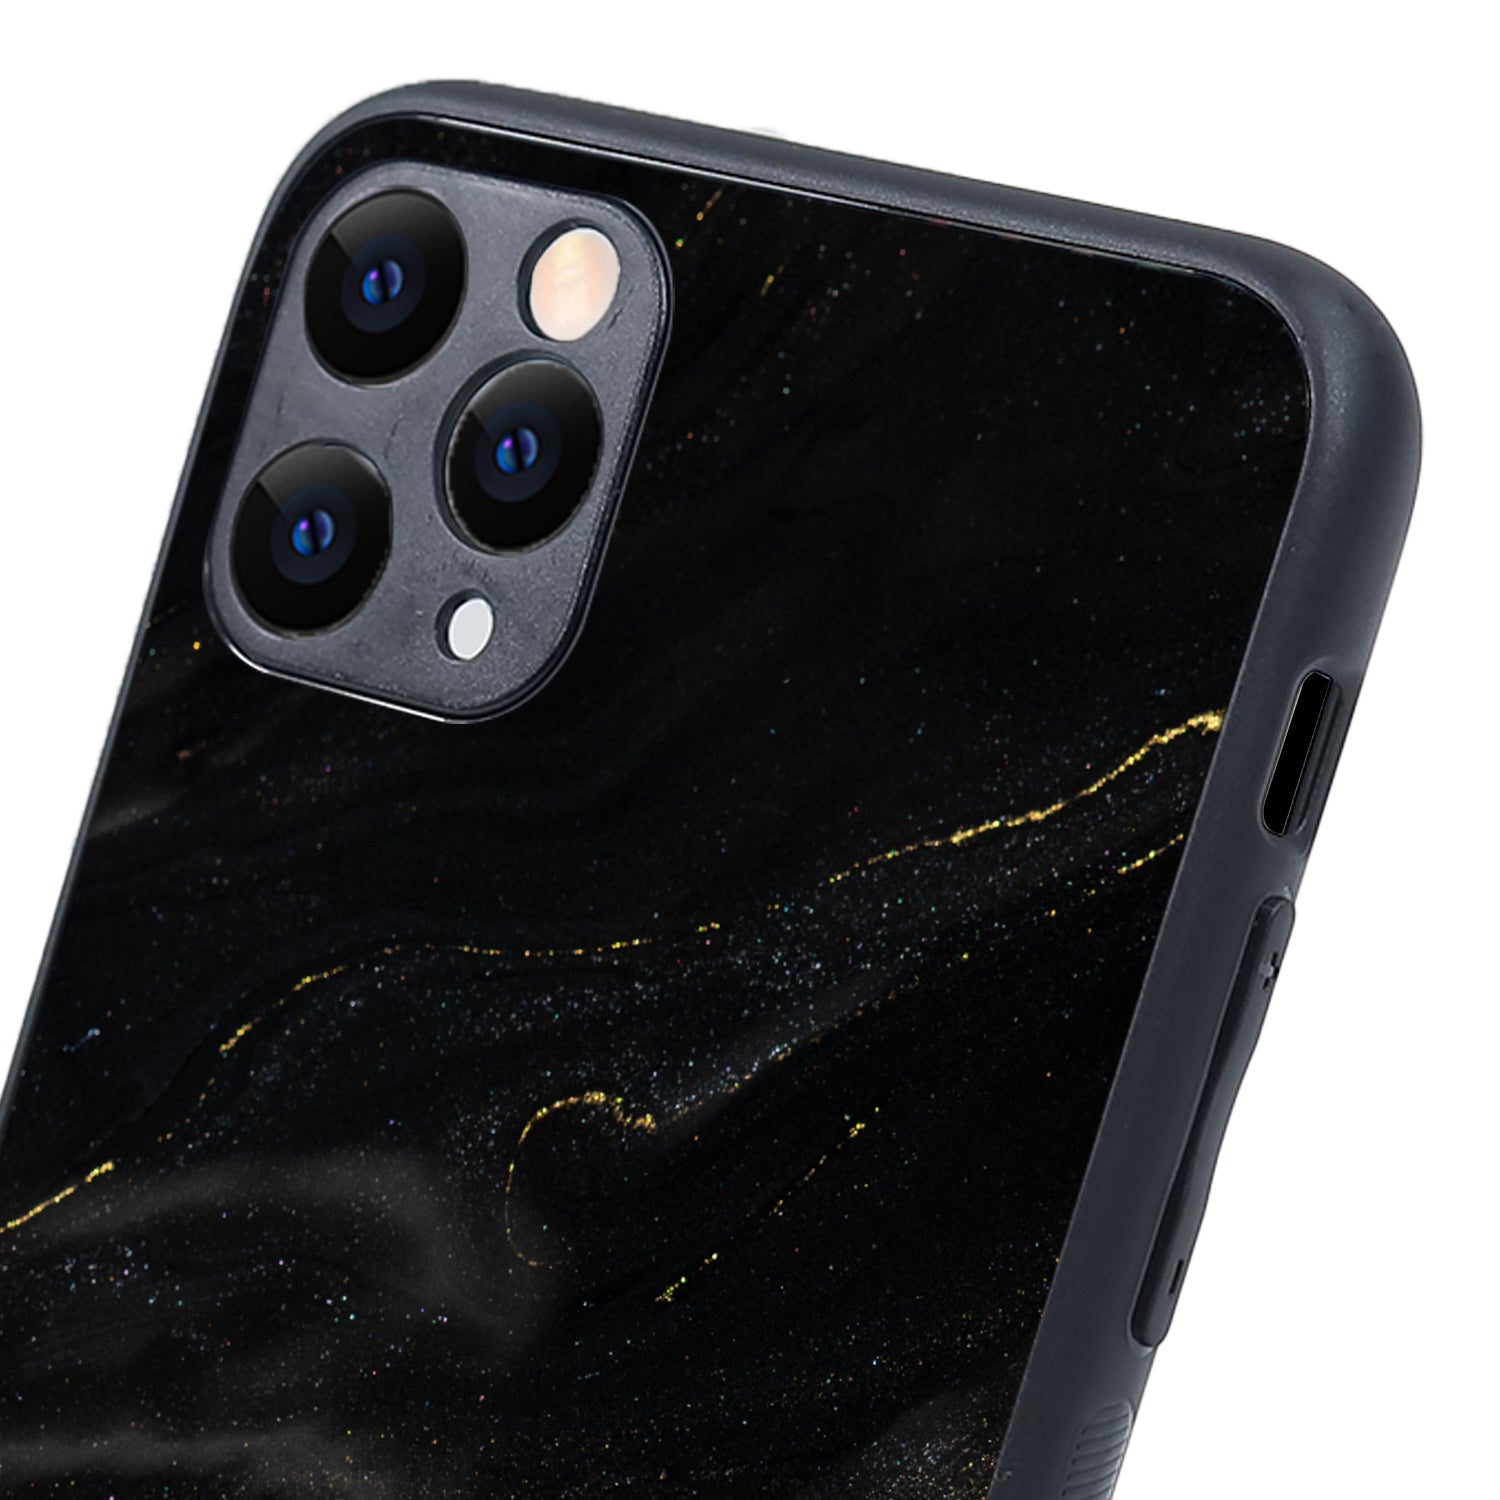 Black Golden Marble iPhone 11 Pro Max Case